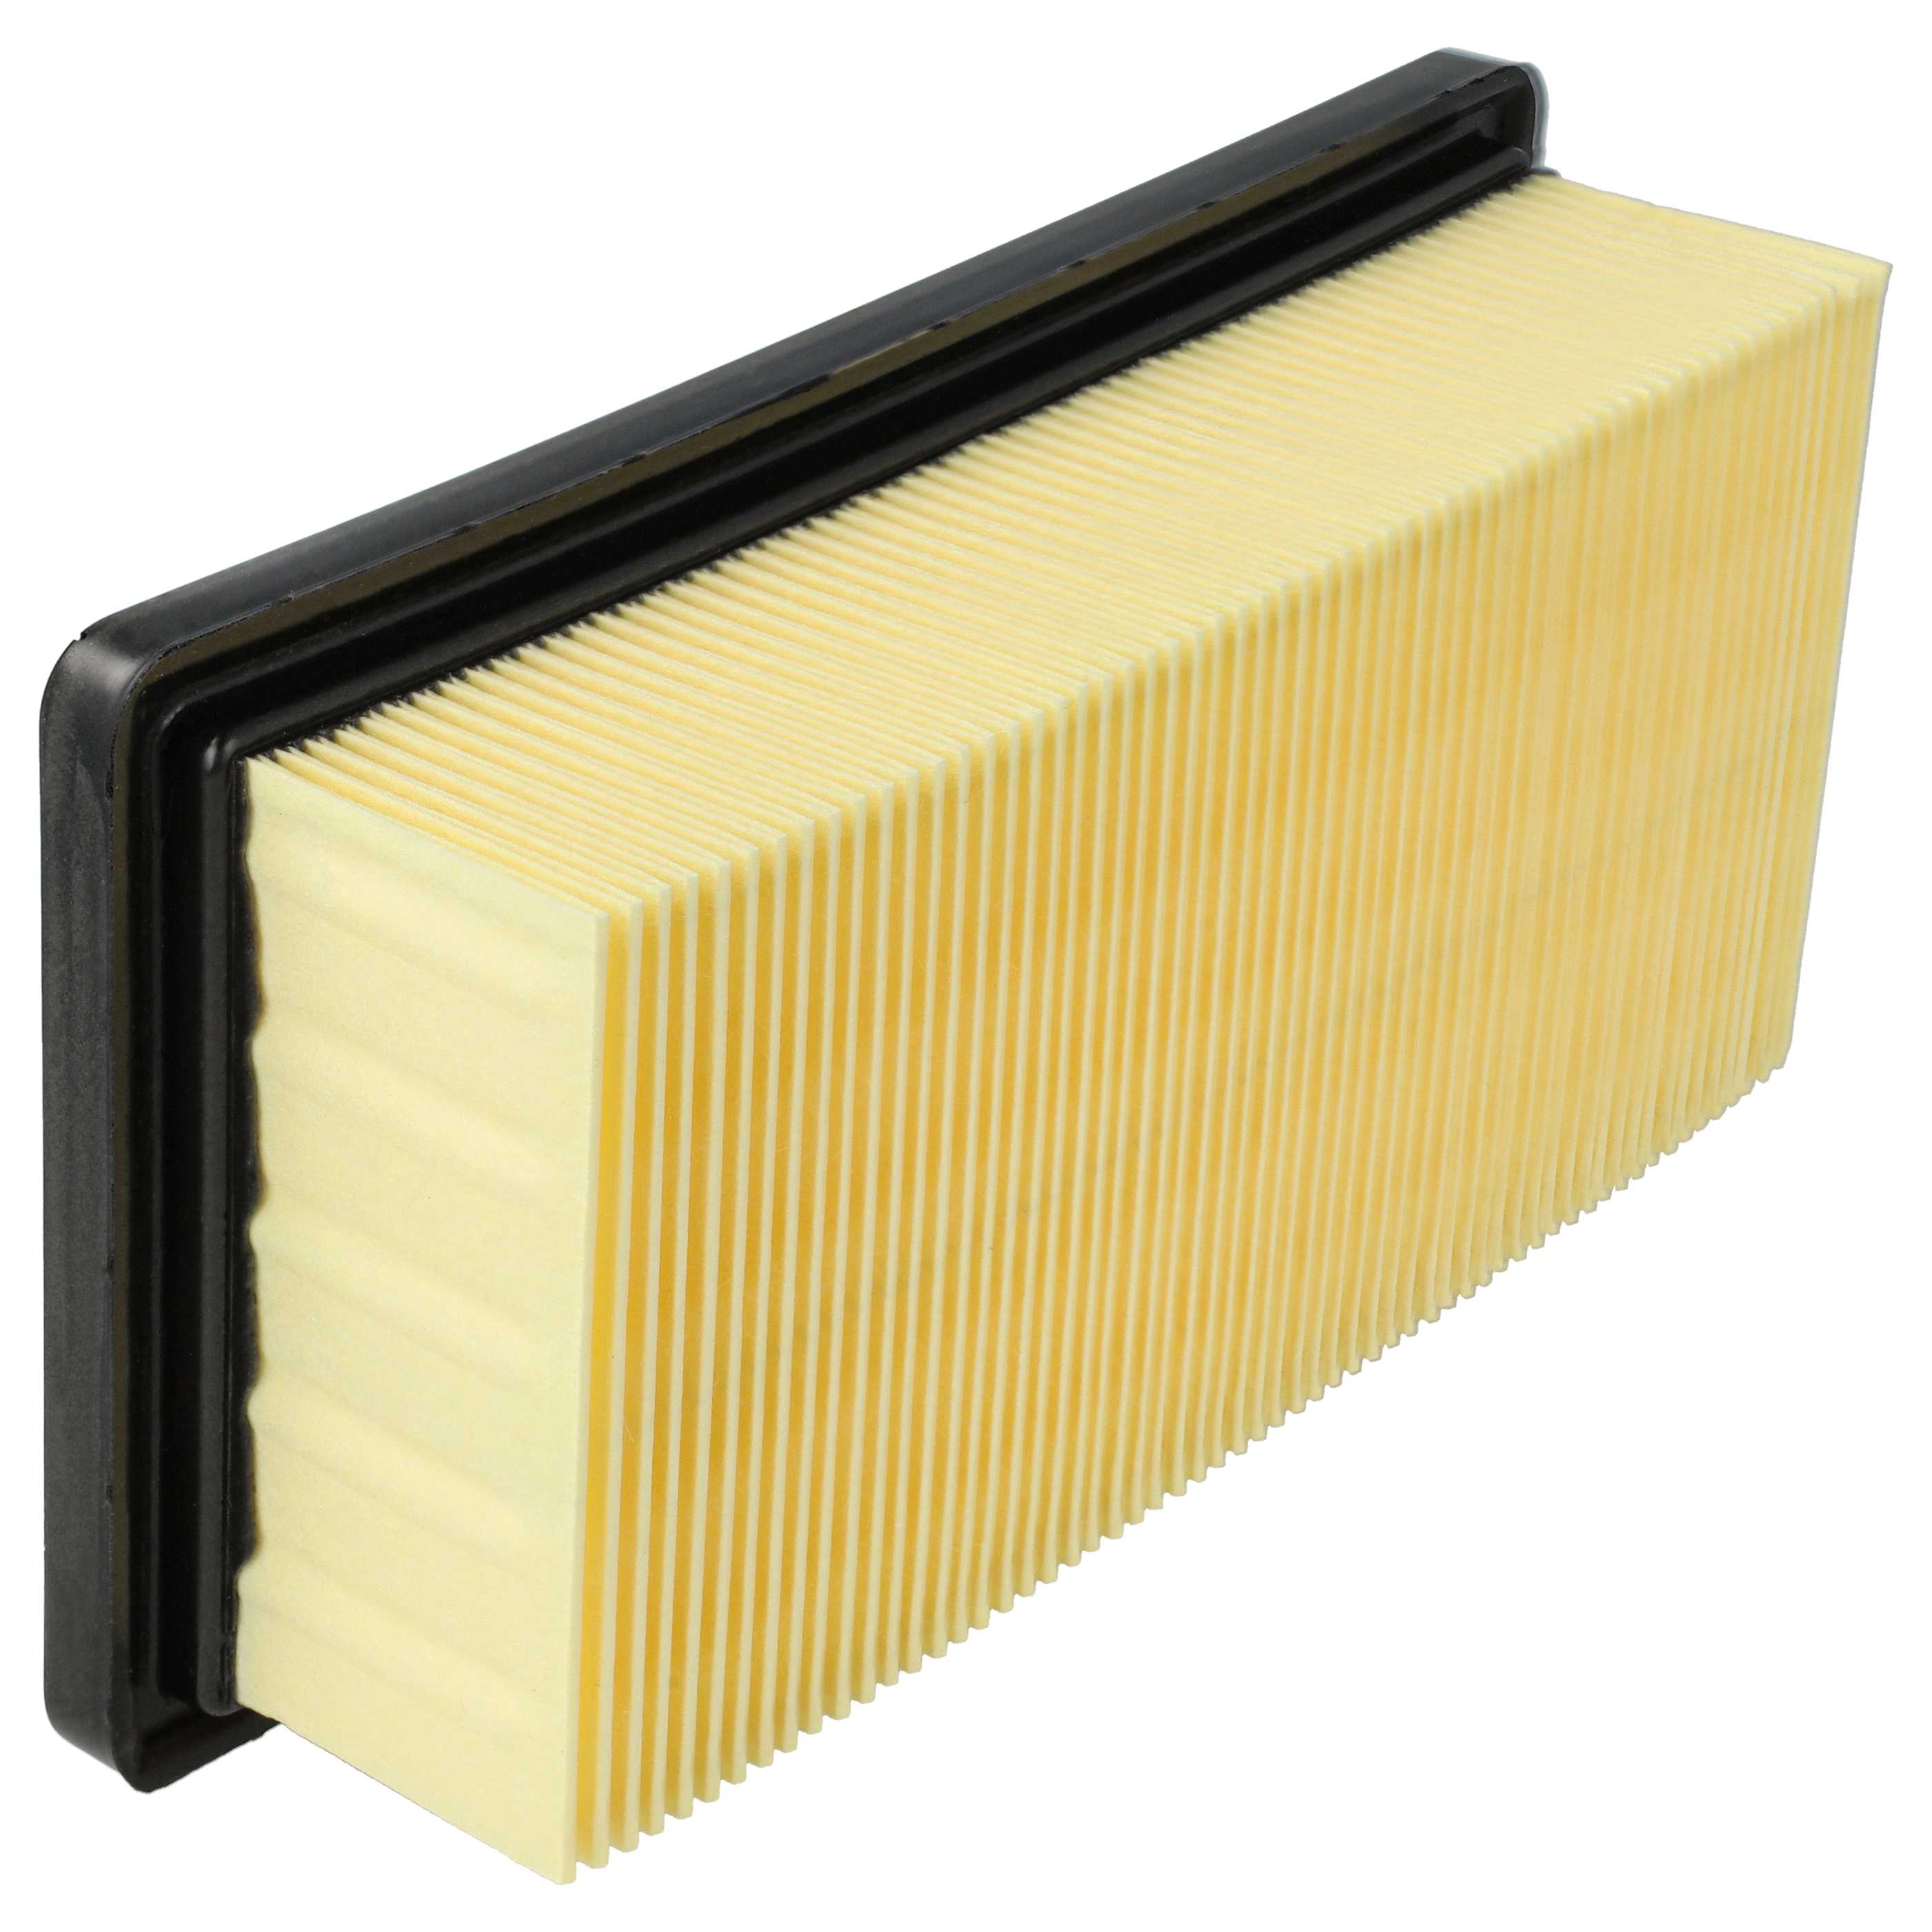 2x Filtro reemplaza Kärcher 6.414-971.0 para aspiradora filtro plisado plano